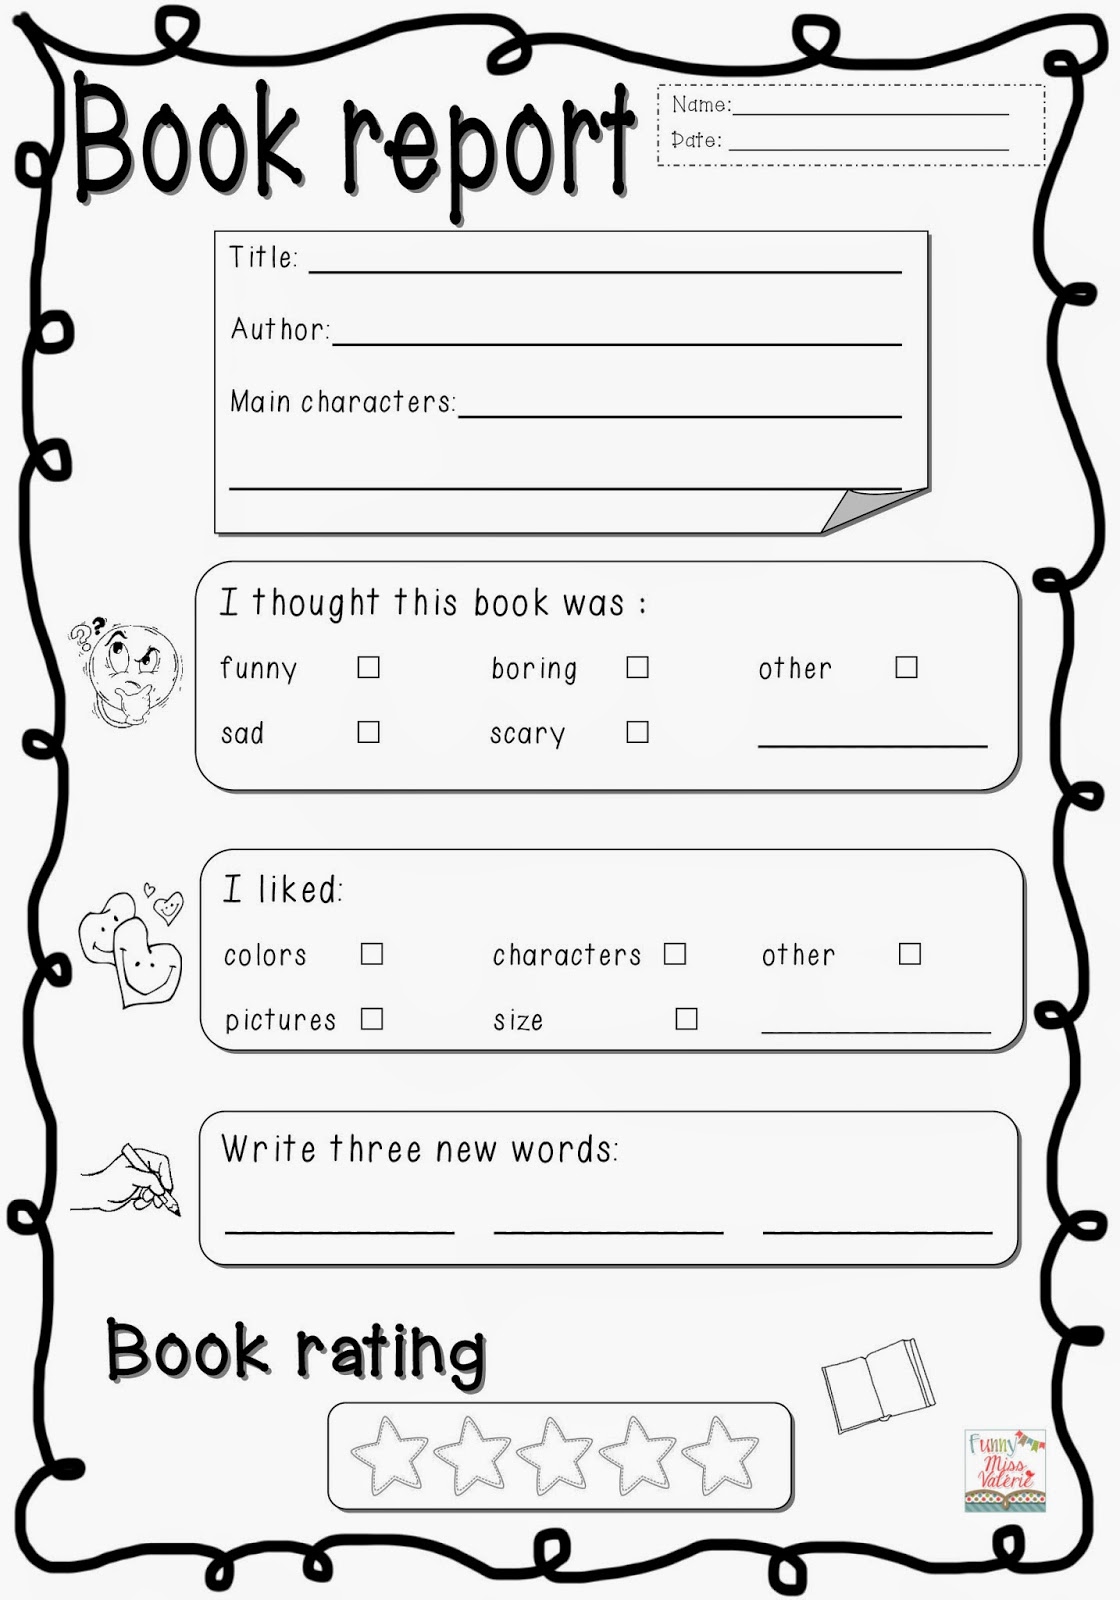 How to Write a 7th Grade Book Report